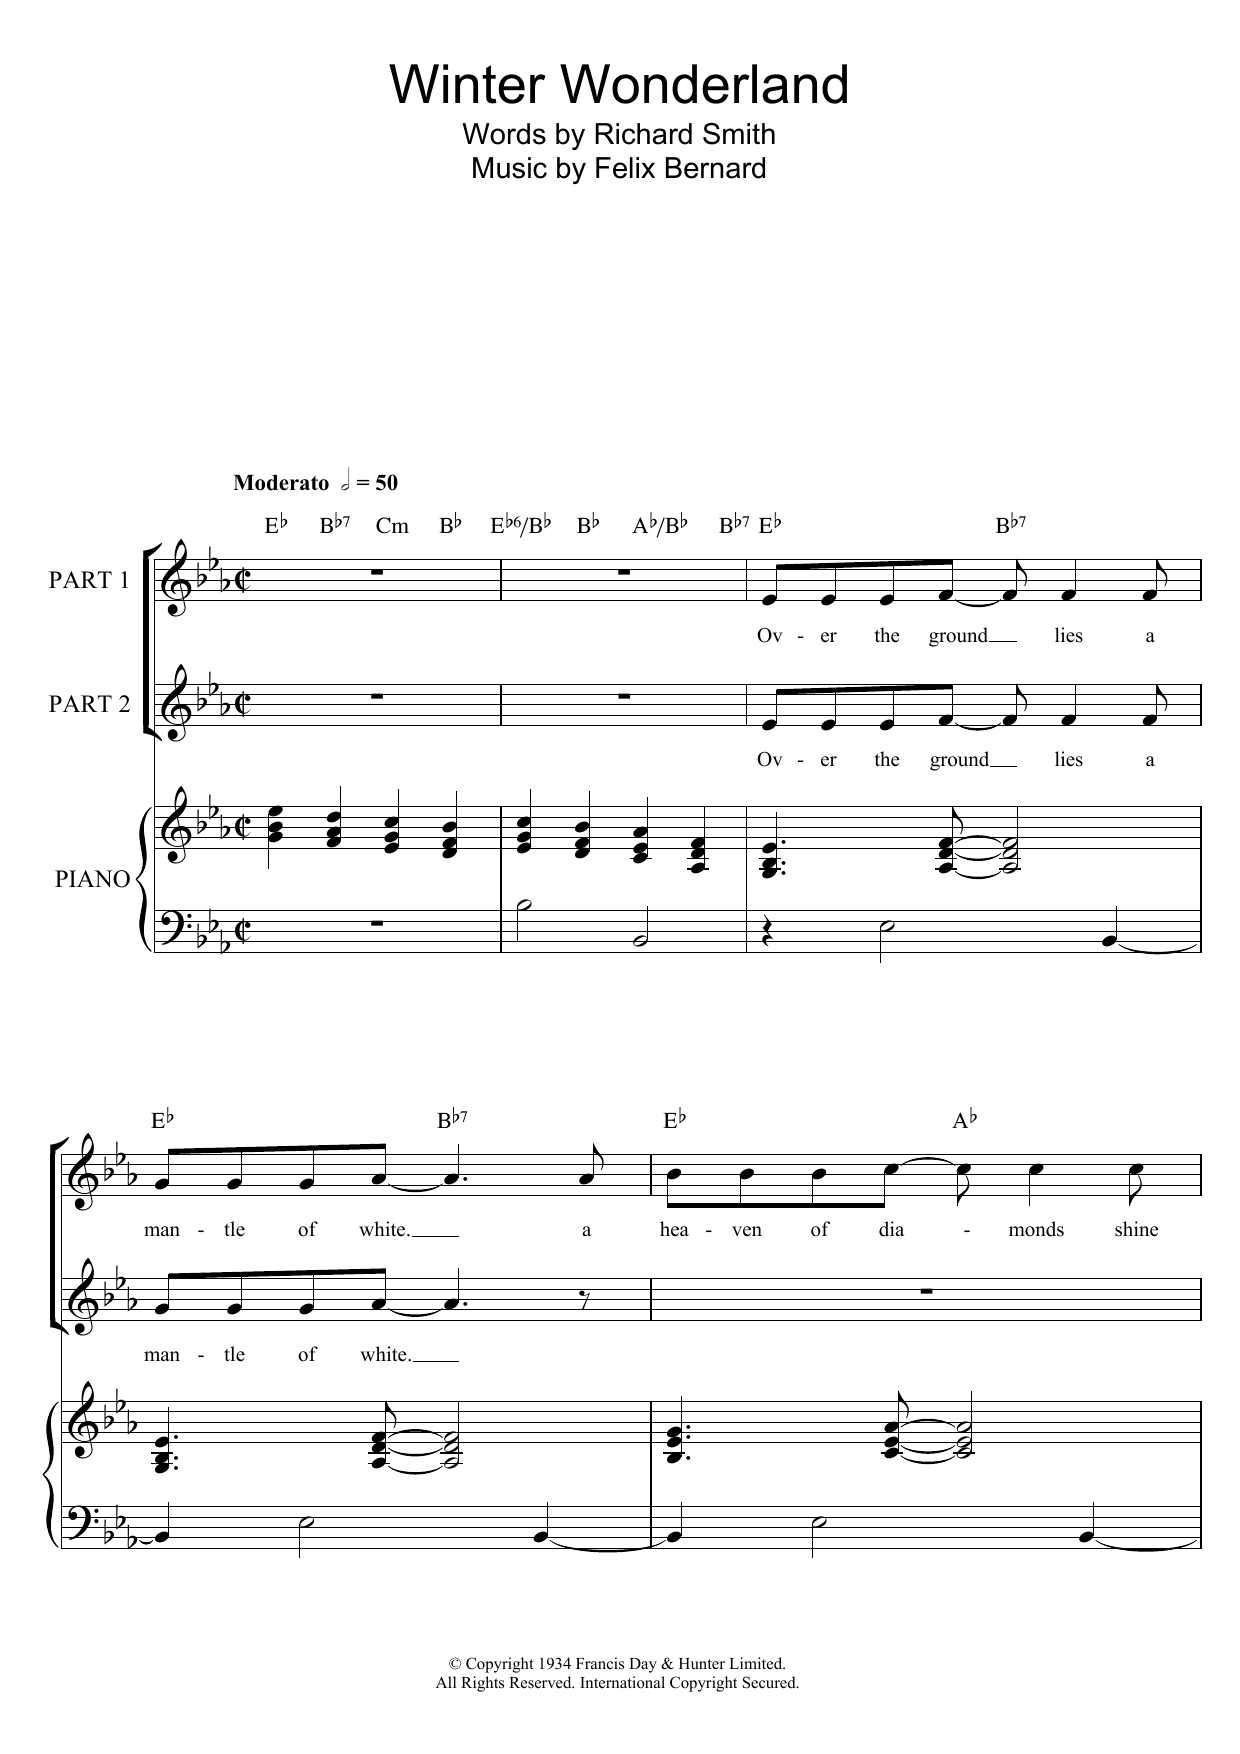 Richard Smith Winter Wonderland (arr. Rick Hein) Sheet Music Notes & Chords for 2-Part Choir - Download or Print PDF